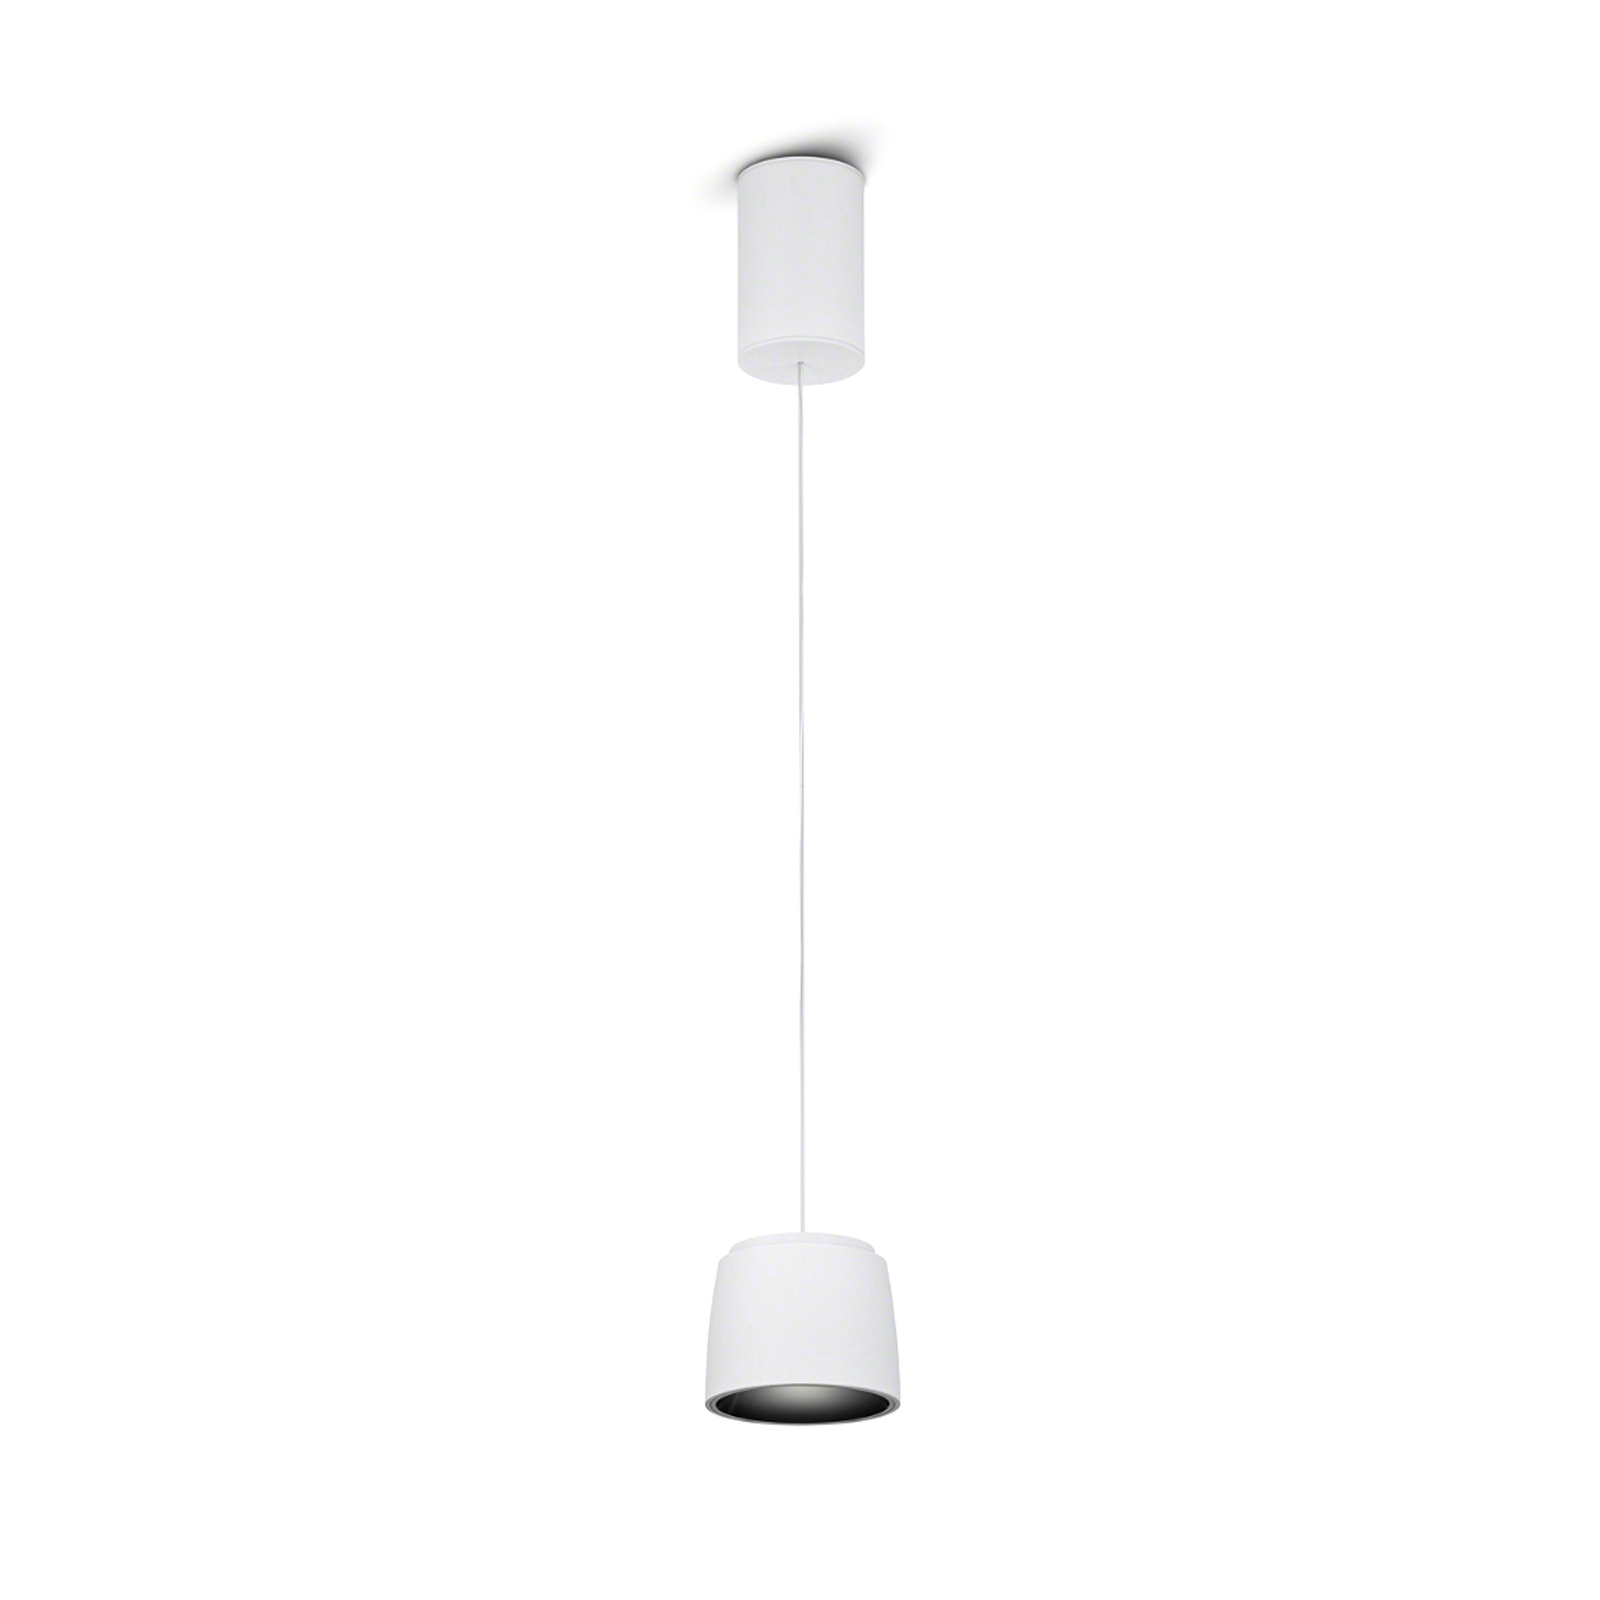 Helestra Ove lampada LED a sospensione 10cm bianco